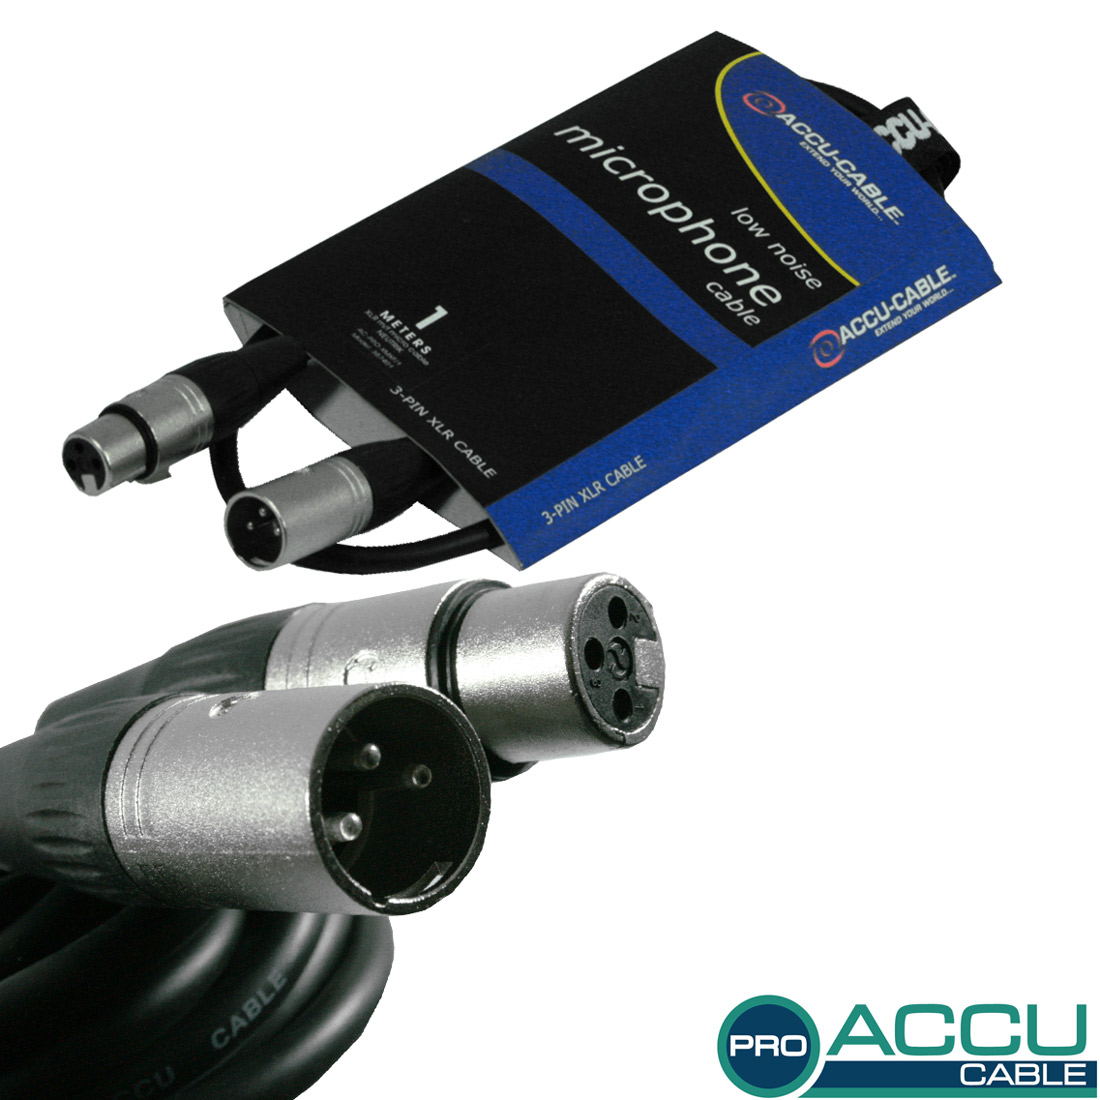 Accu Cable AC-PRO XLR audio cable 1,0m